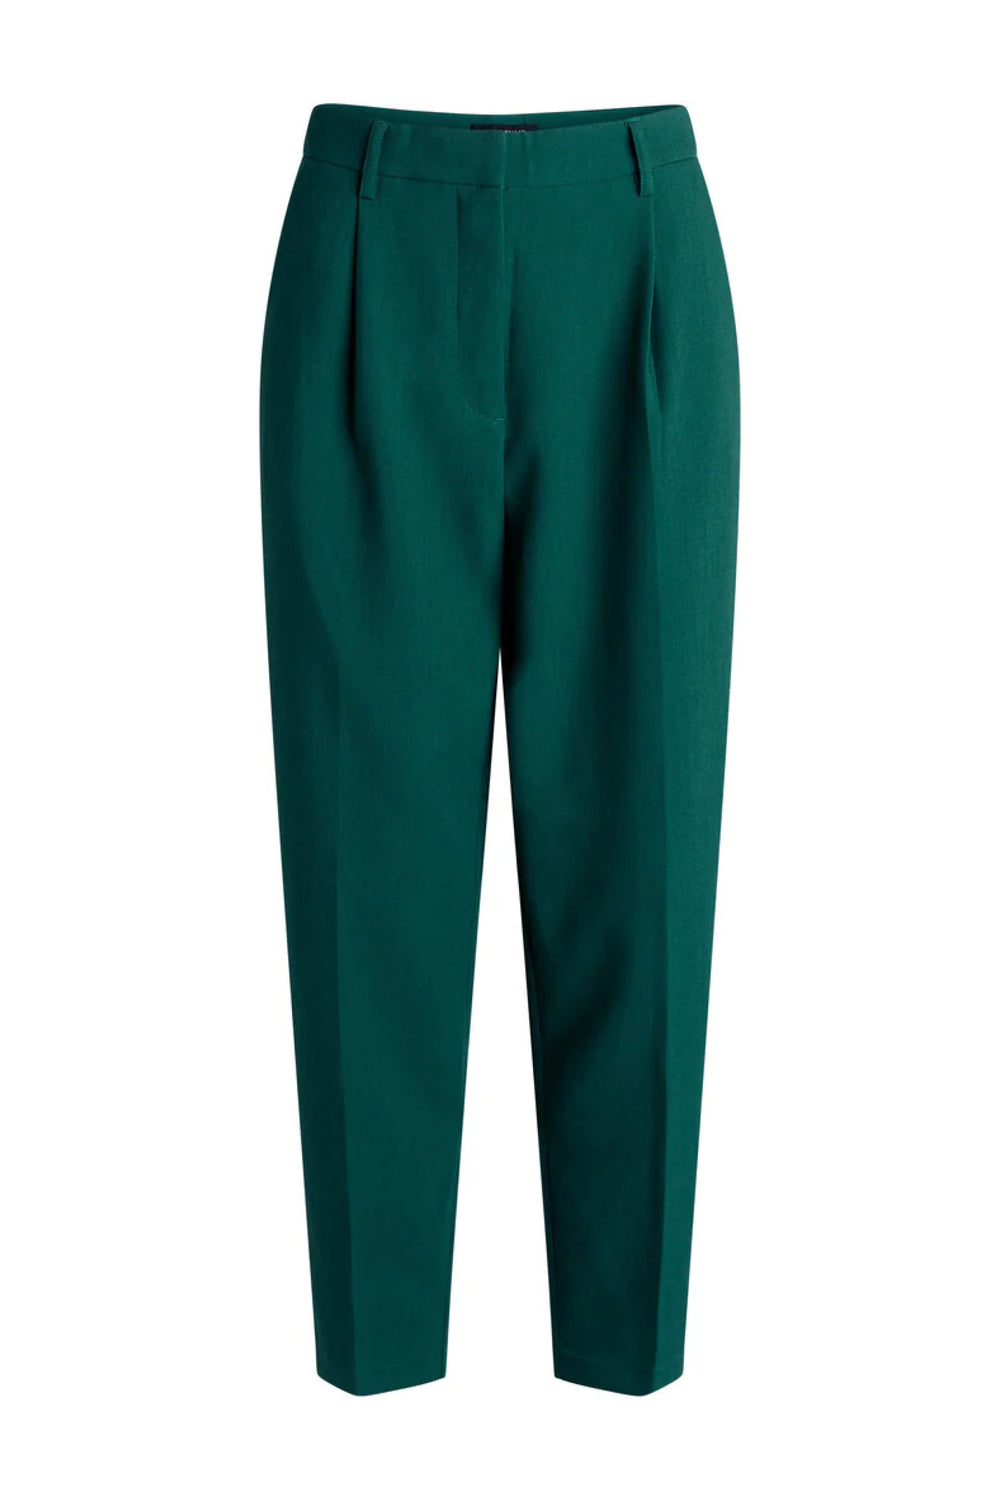 Bruuns Bazaar Women CindySusBBDagny pants Pants Atlantic Green